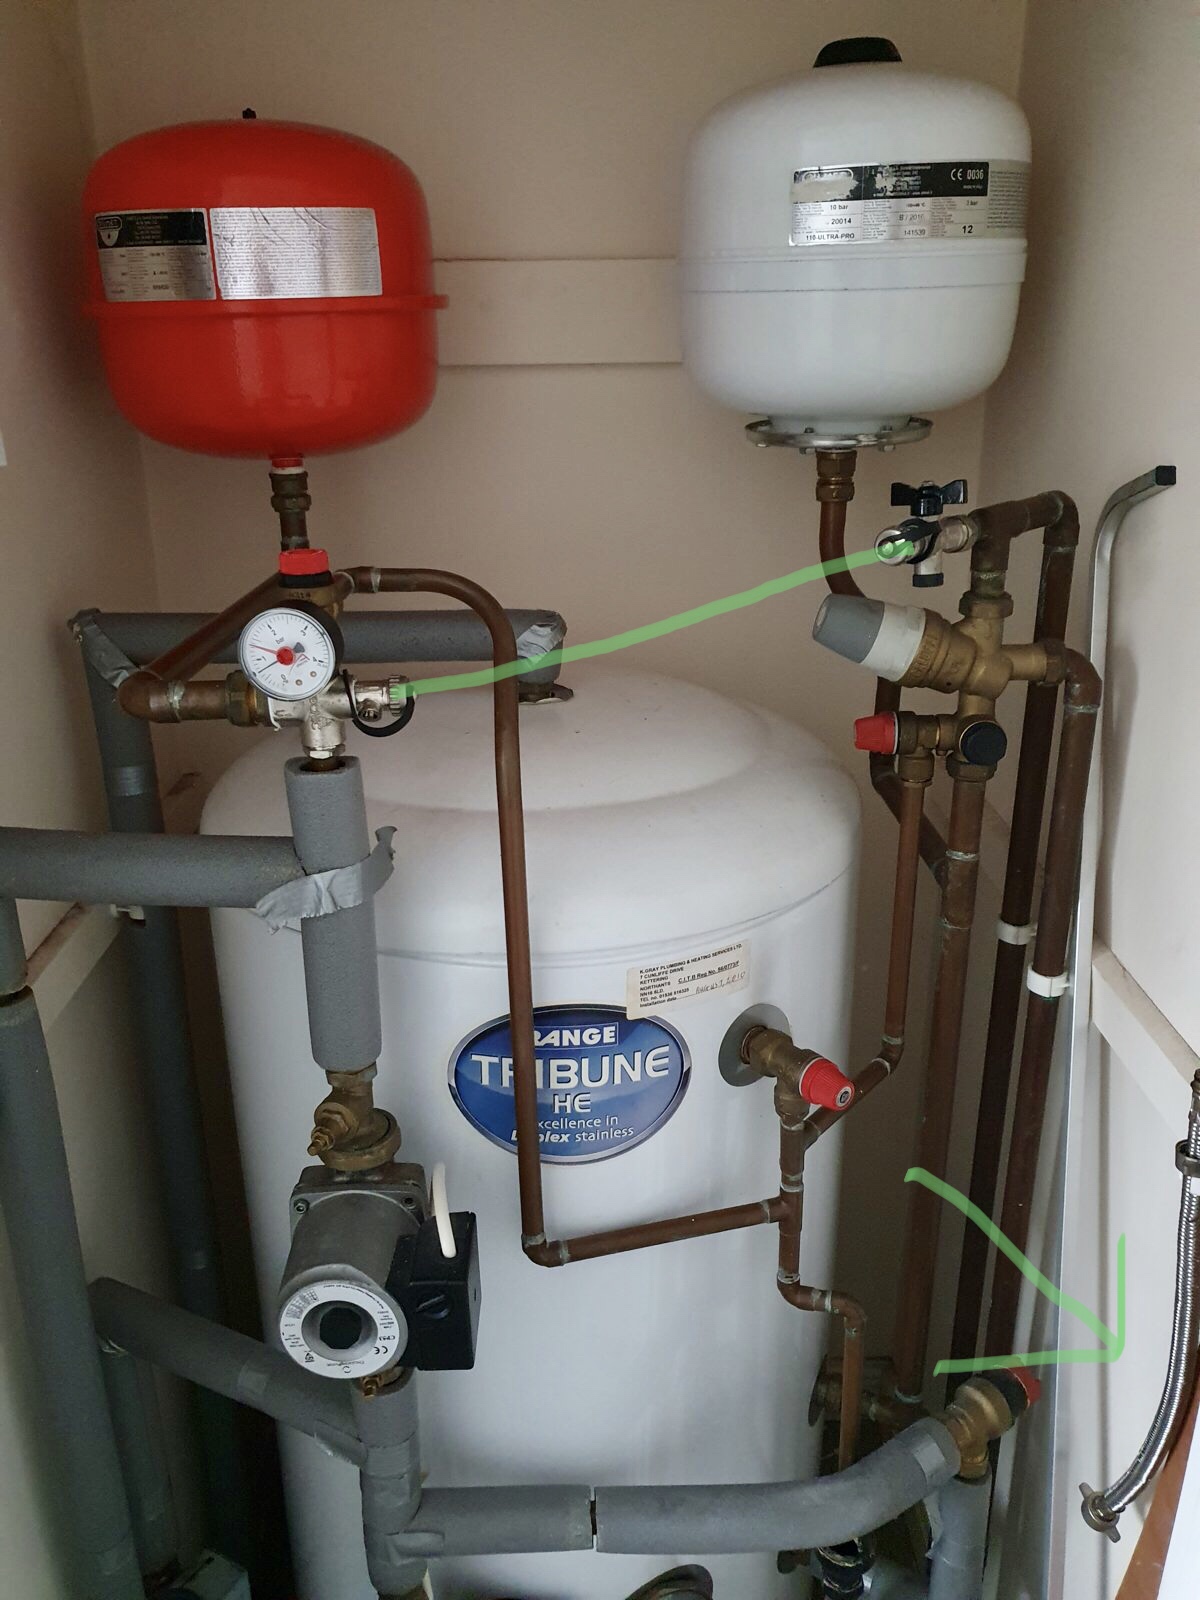 Adjusting pressure valve on range Tribune he hot water